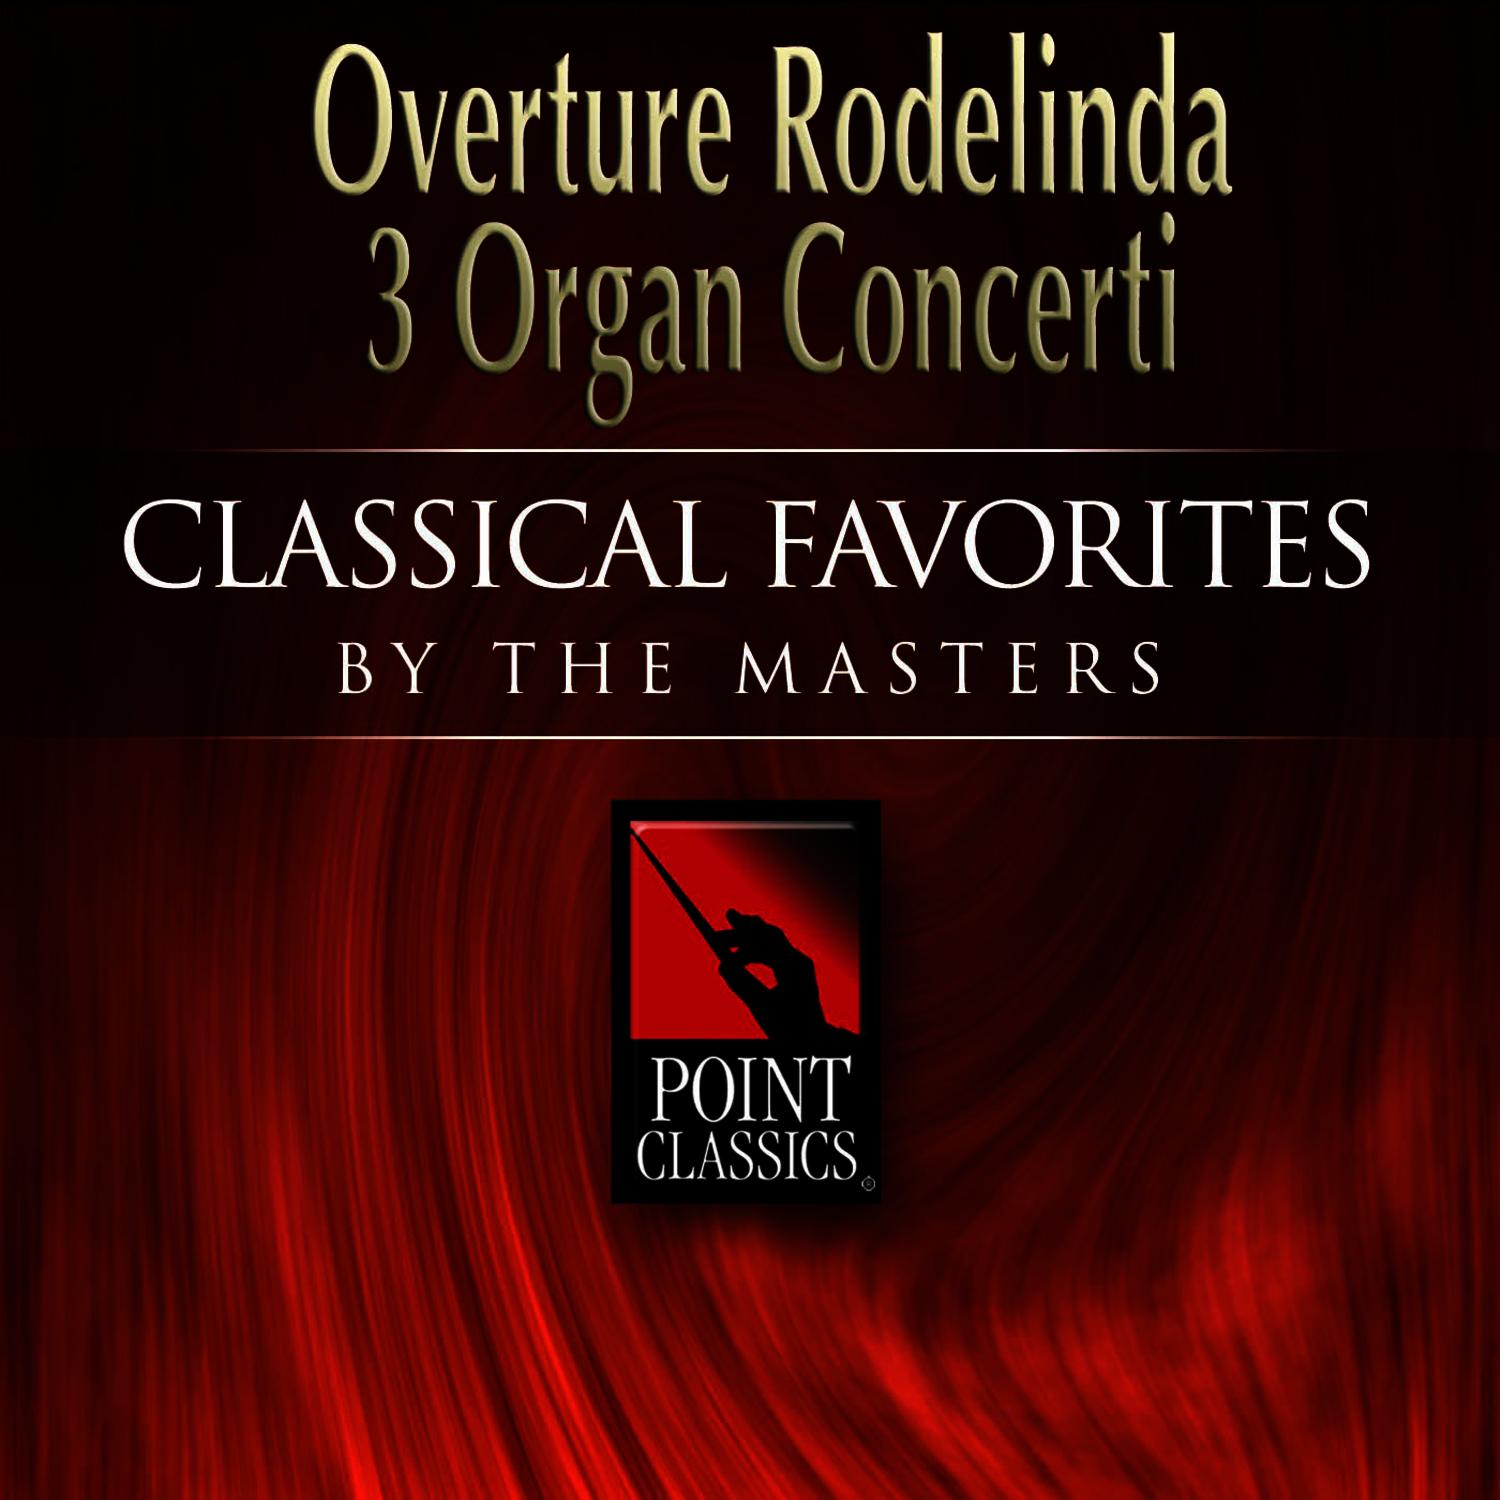 Concerto for Organ and Orchestra No. 4, in F Major, Op. 4: Adagio